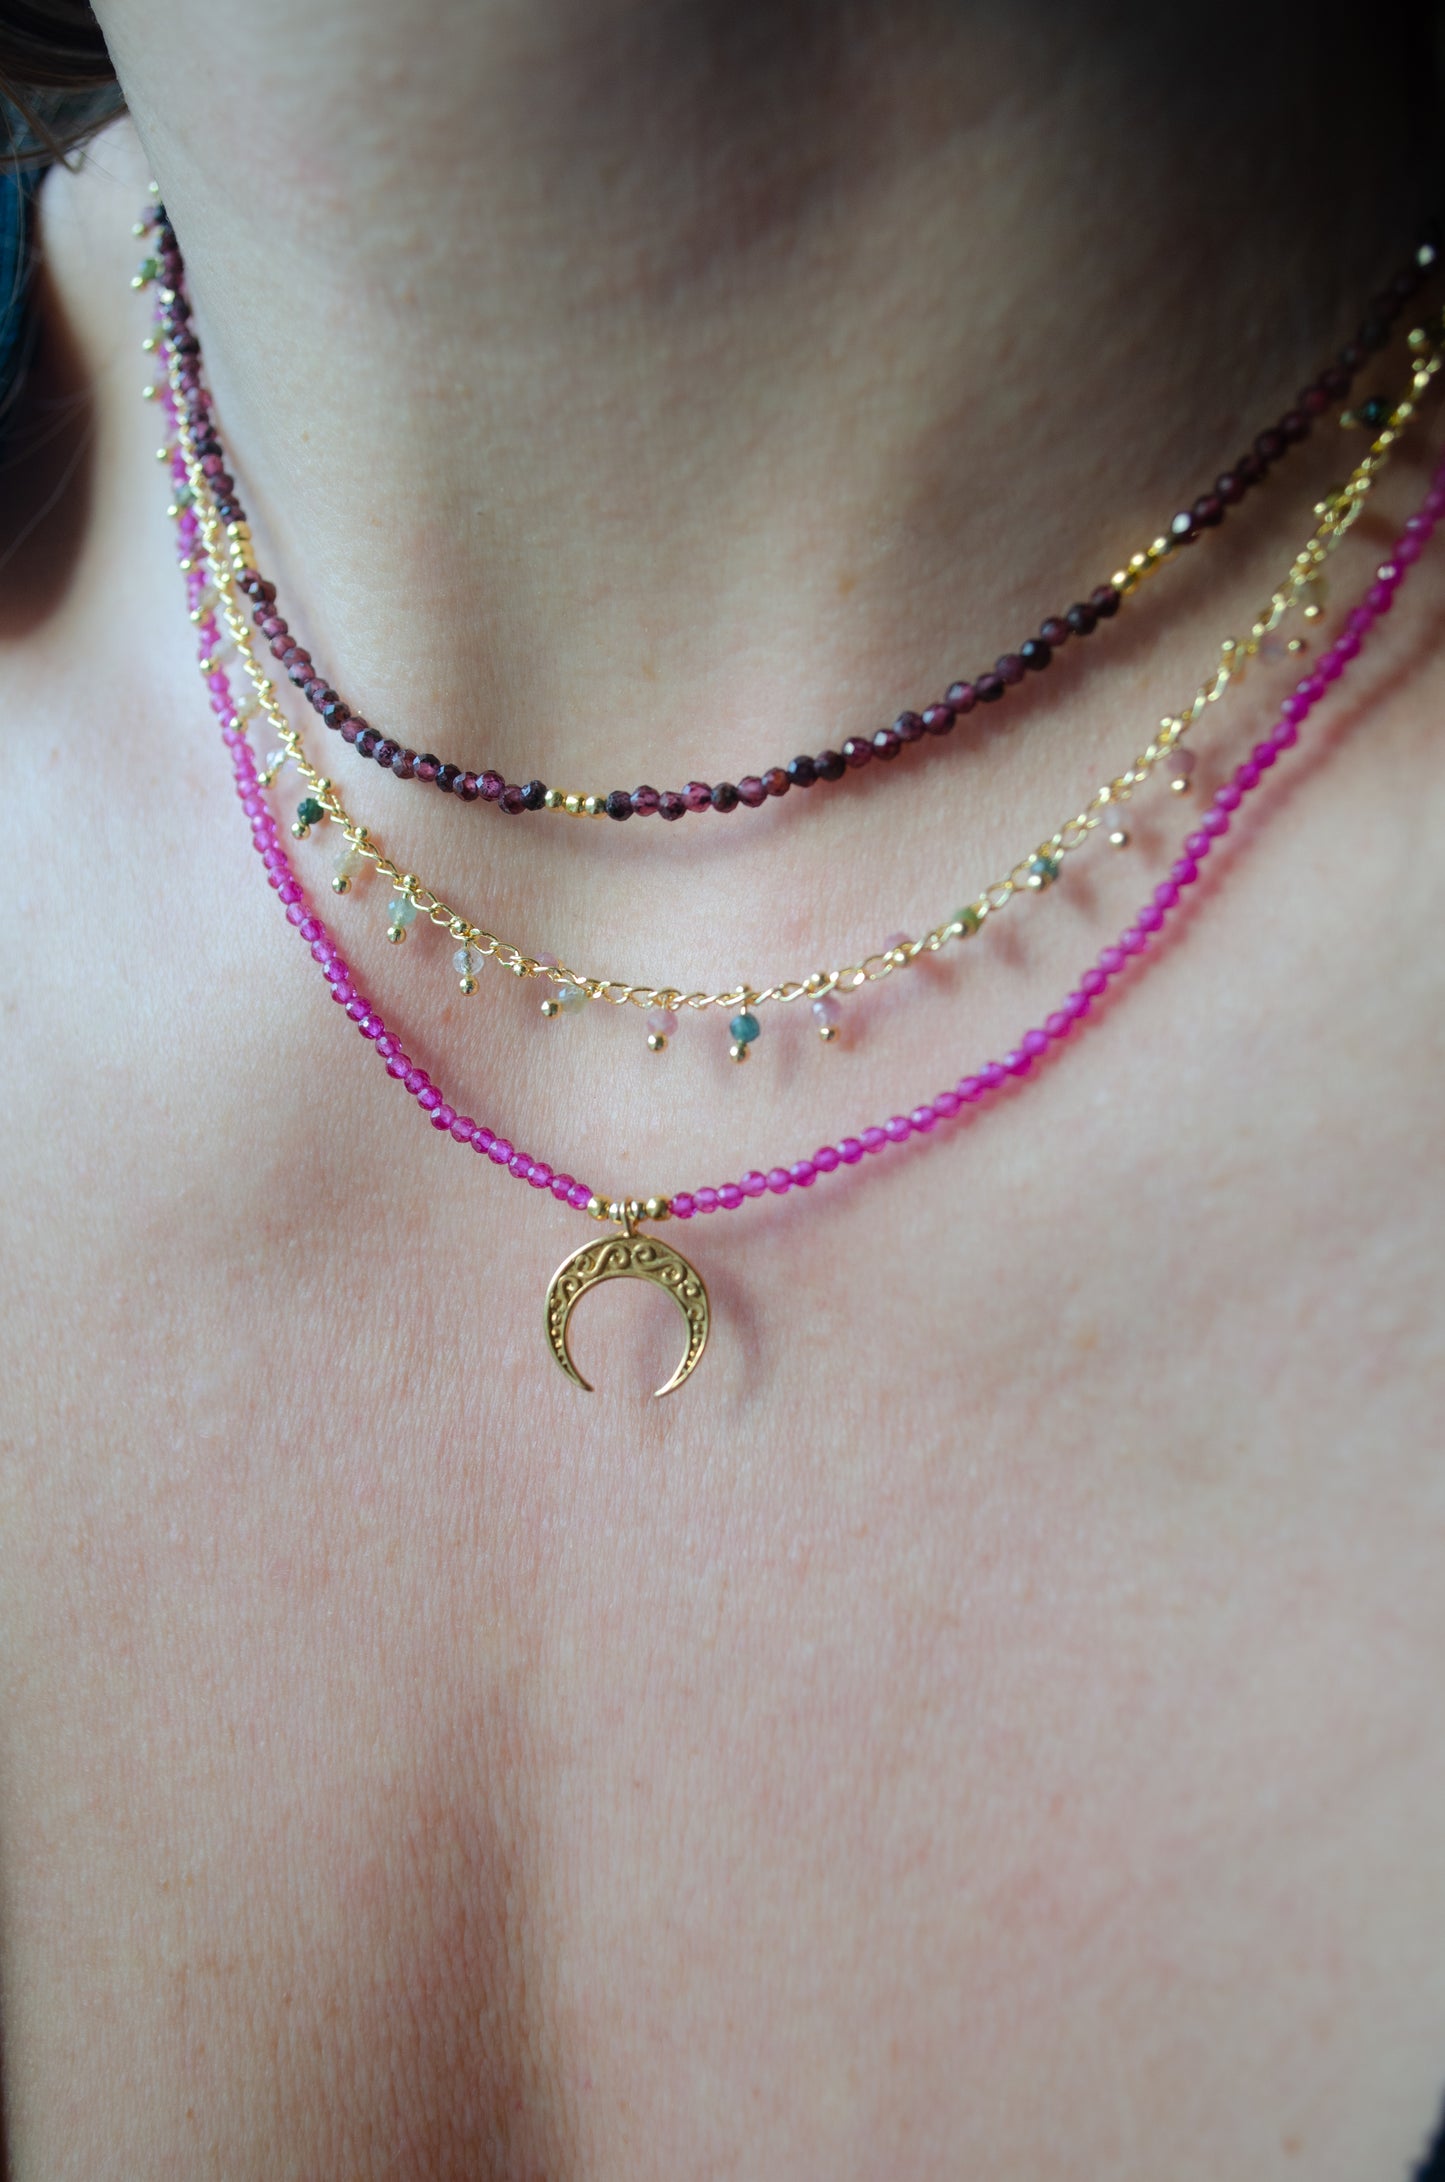 Dainty Garnet necklace